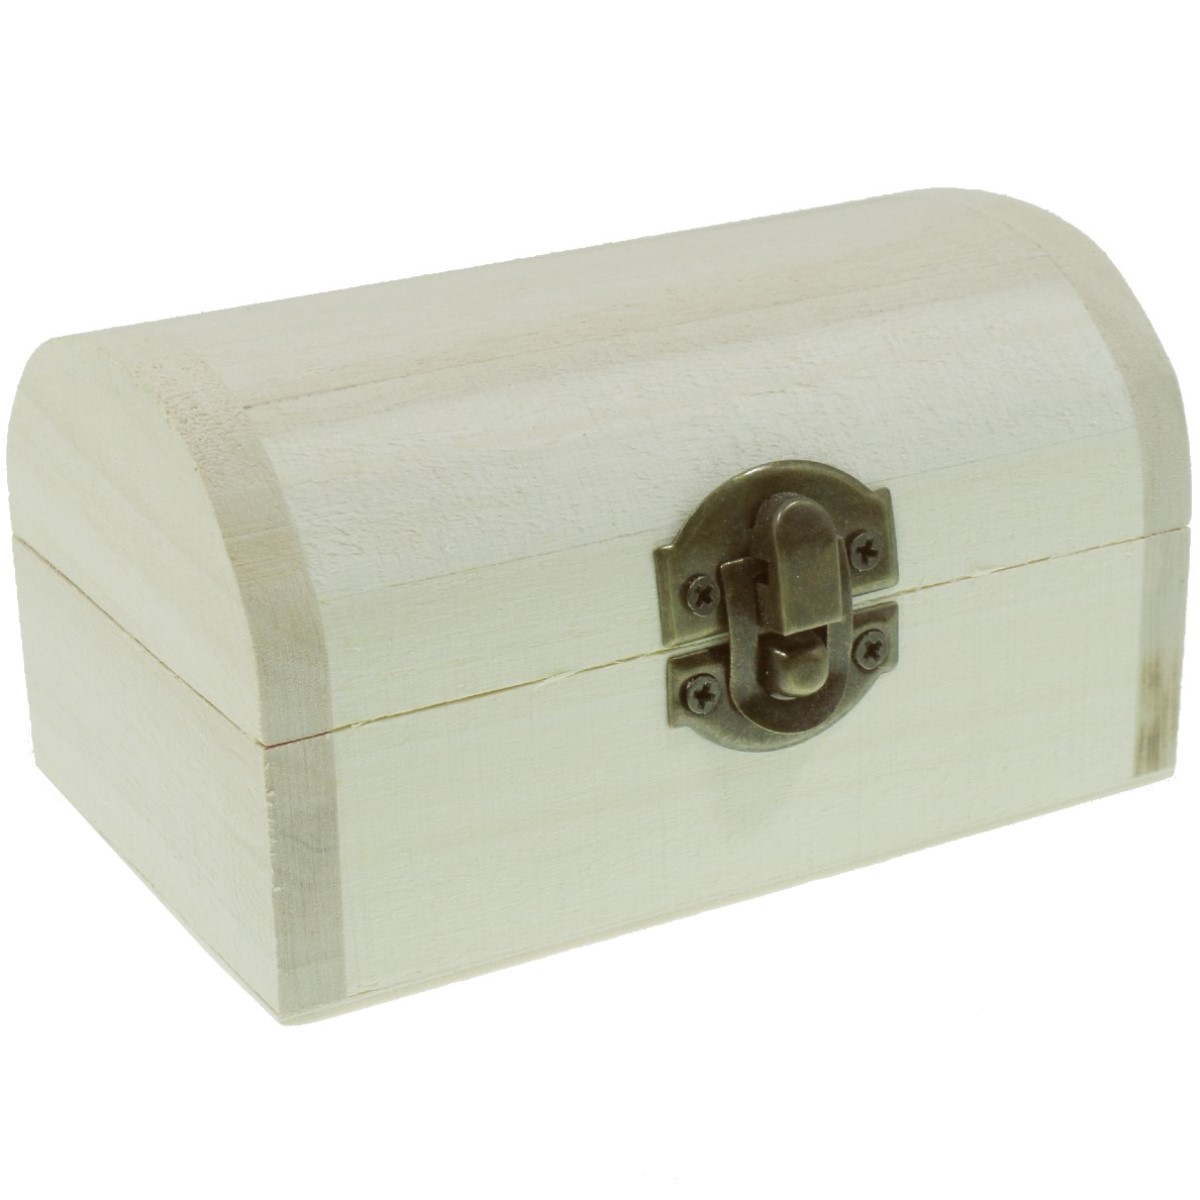 Cutie lemn cufar nefinisata cu inchizatoare clapeta 10 5x7x5 5cm C32-03b 35255